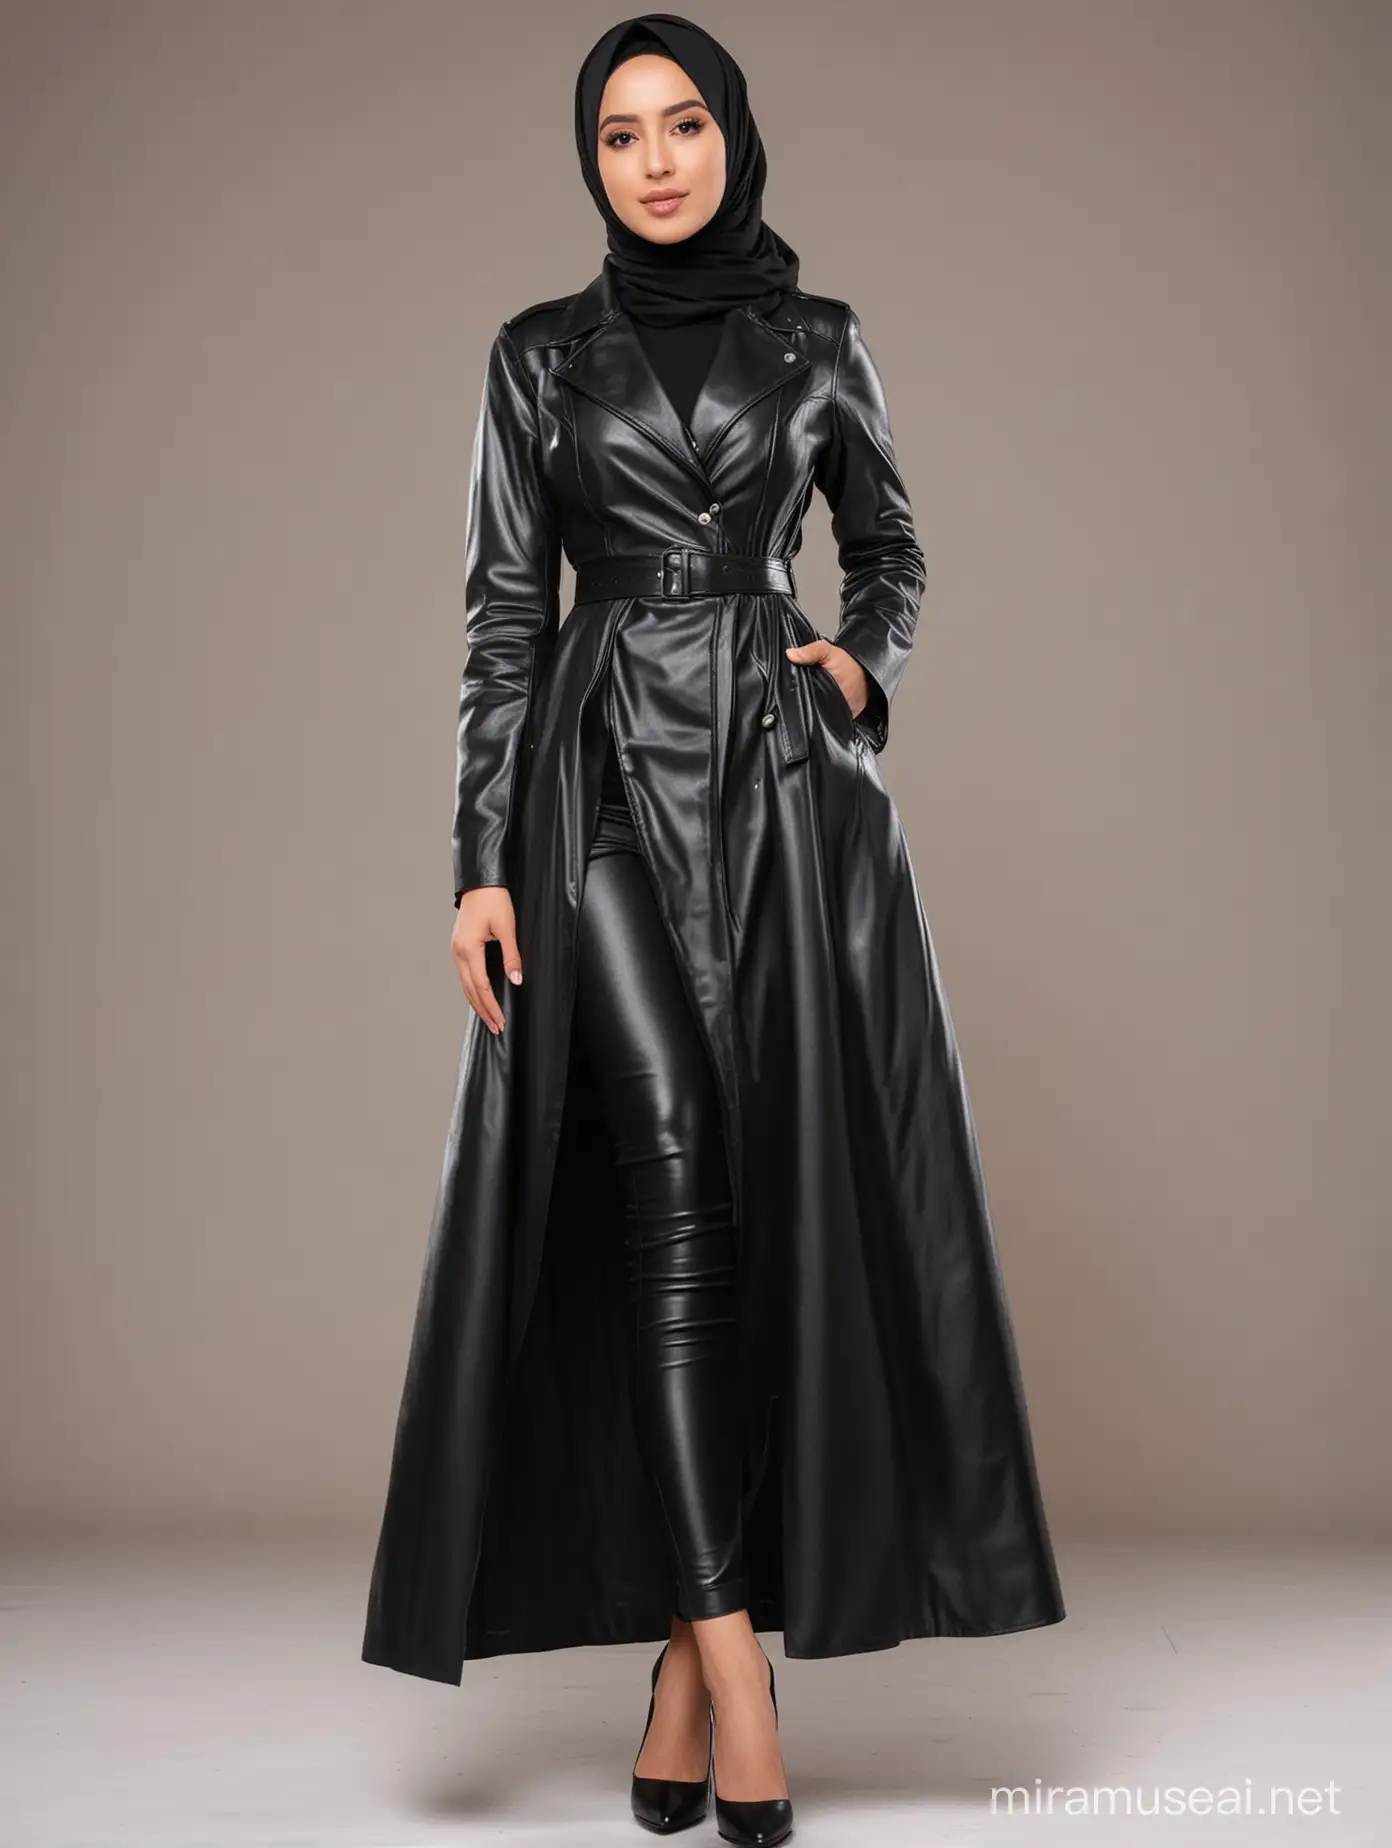 beautiful hijab woman wearing a long black leather coat